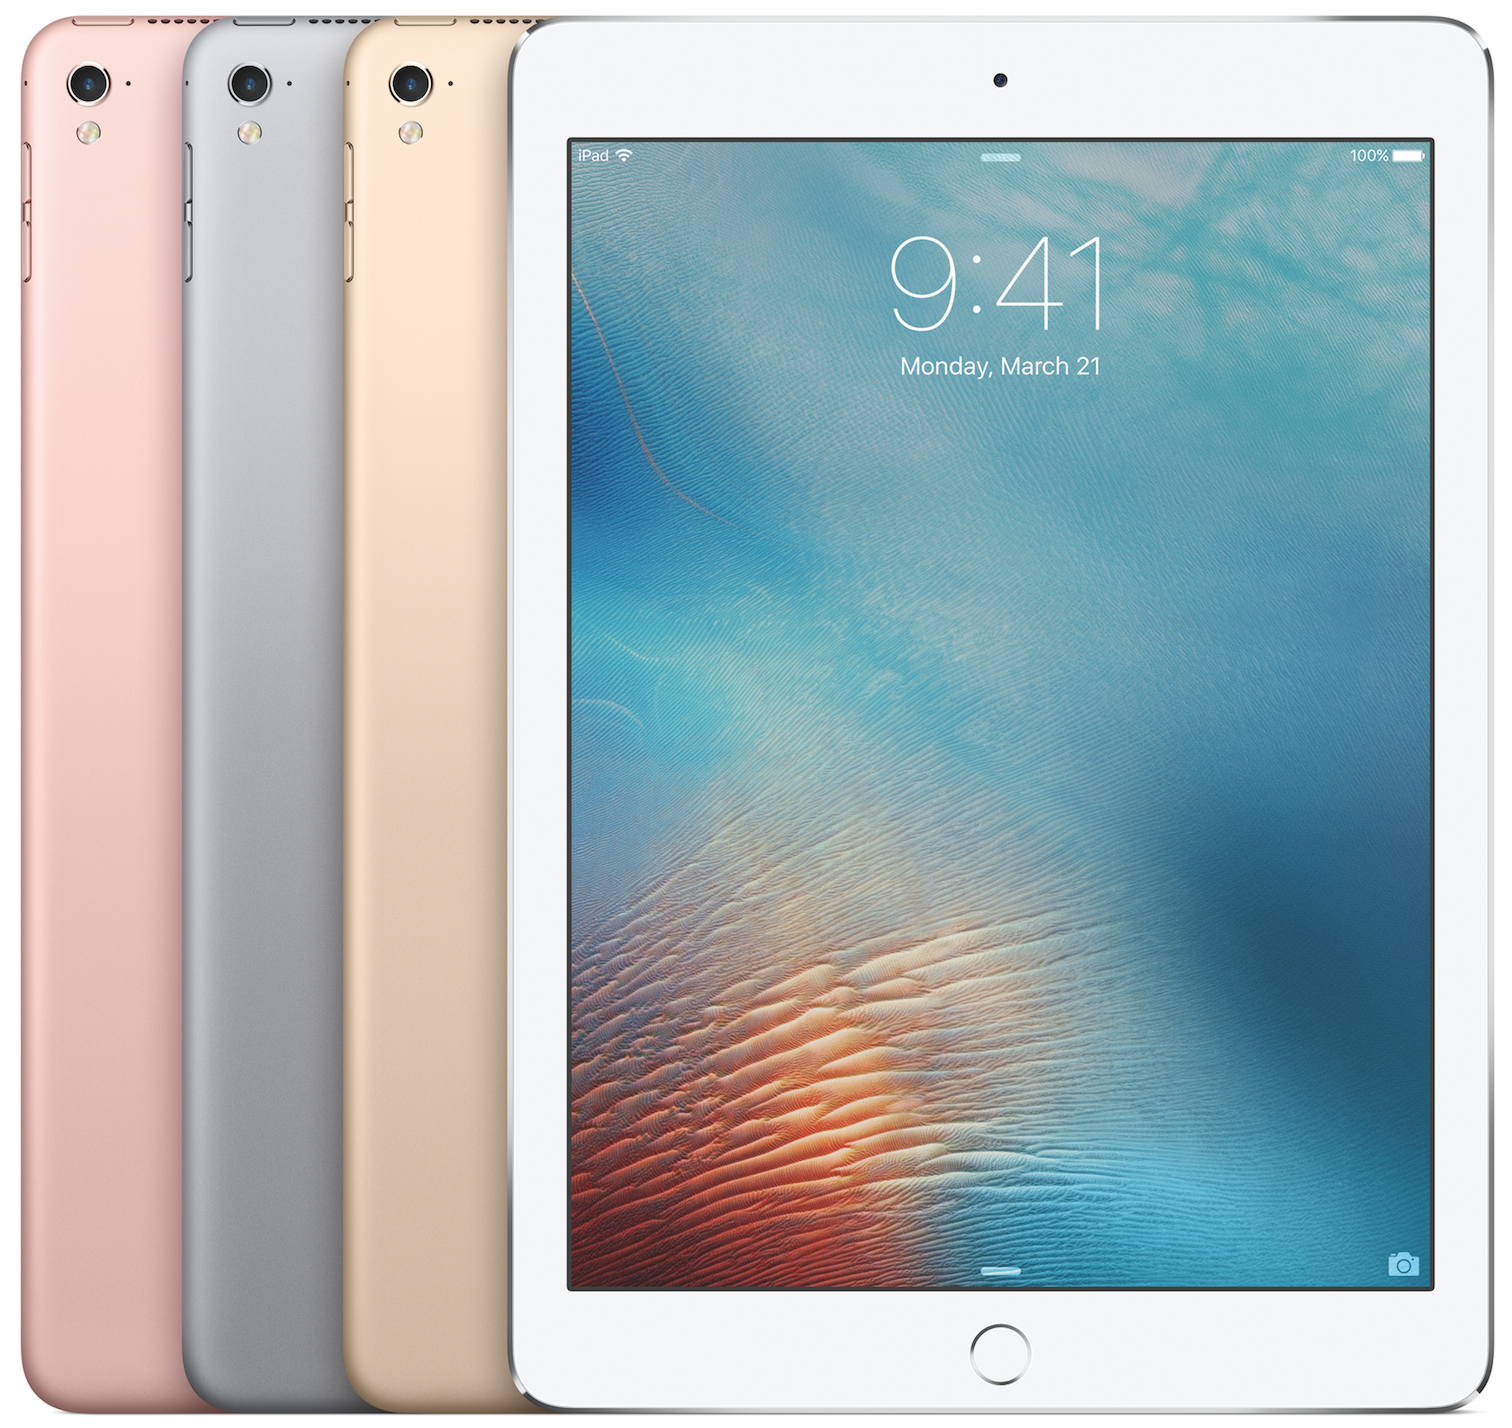 Apple iPad Pro 9.7" | A1673 | WiFi